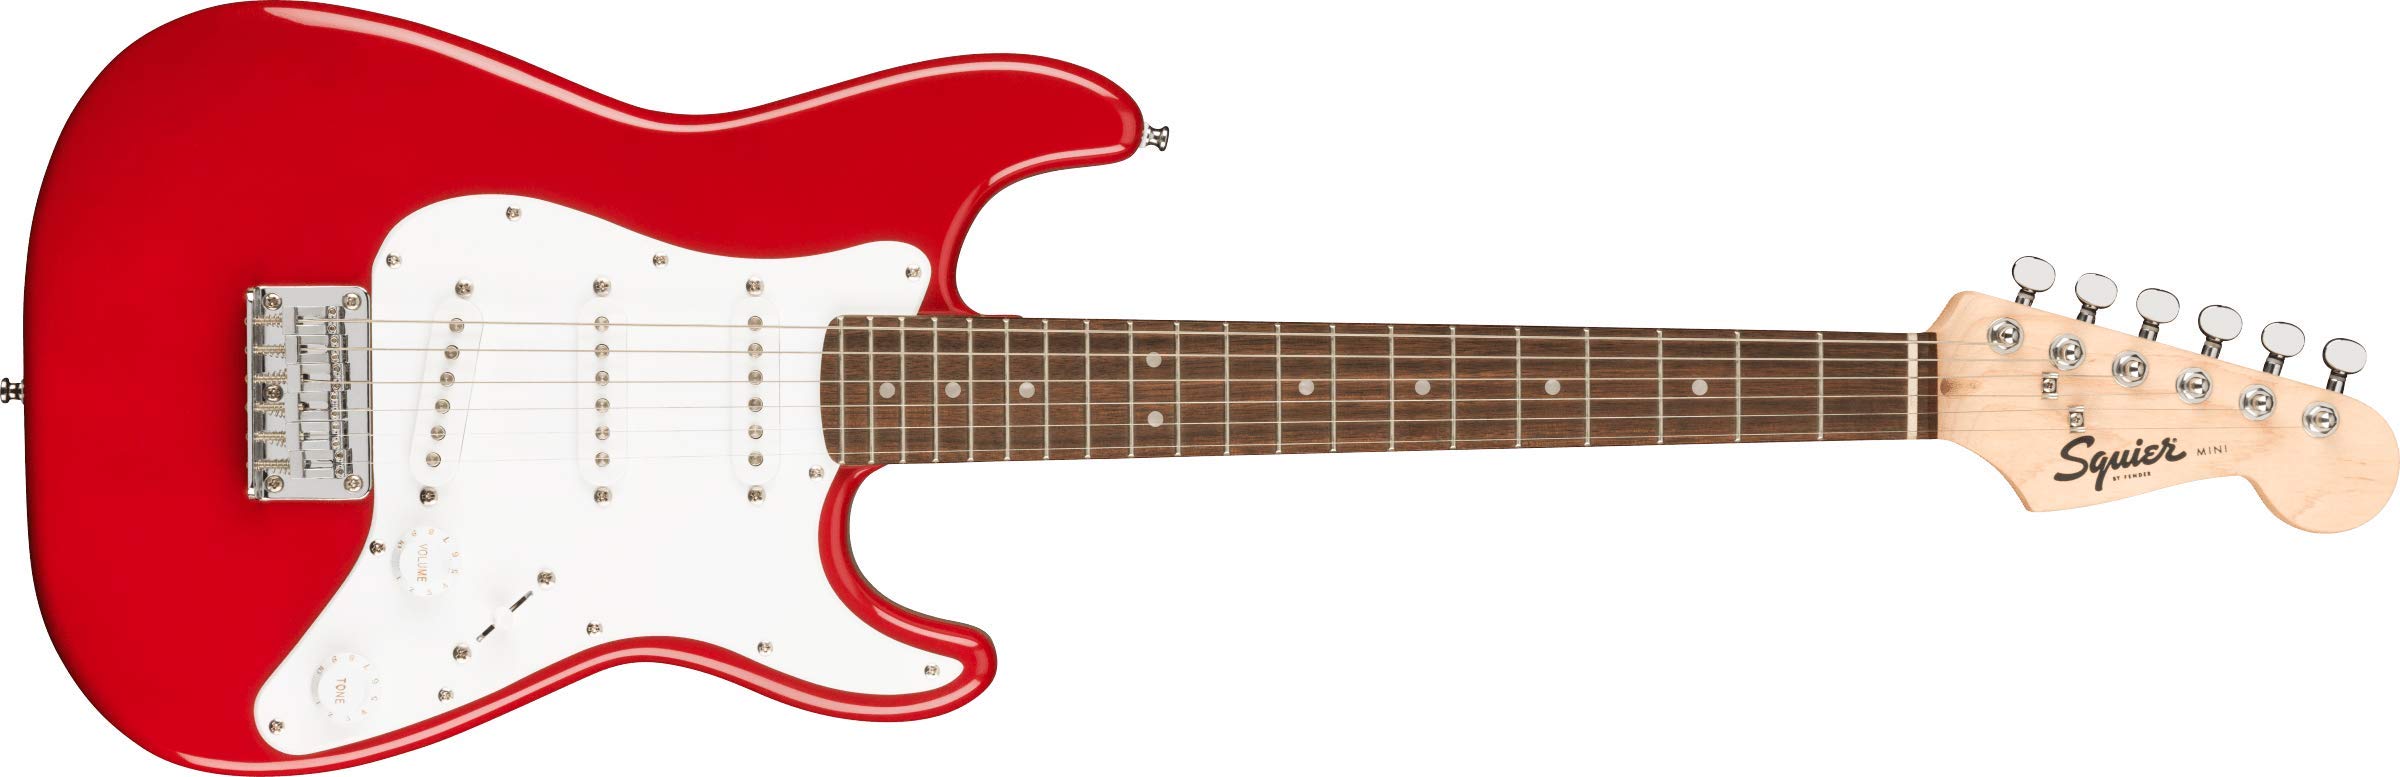 Squier Guitarra eléctrica Mini Strat - Dakota Red con diapasón de laurel